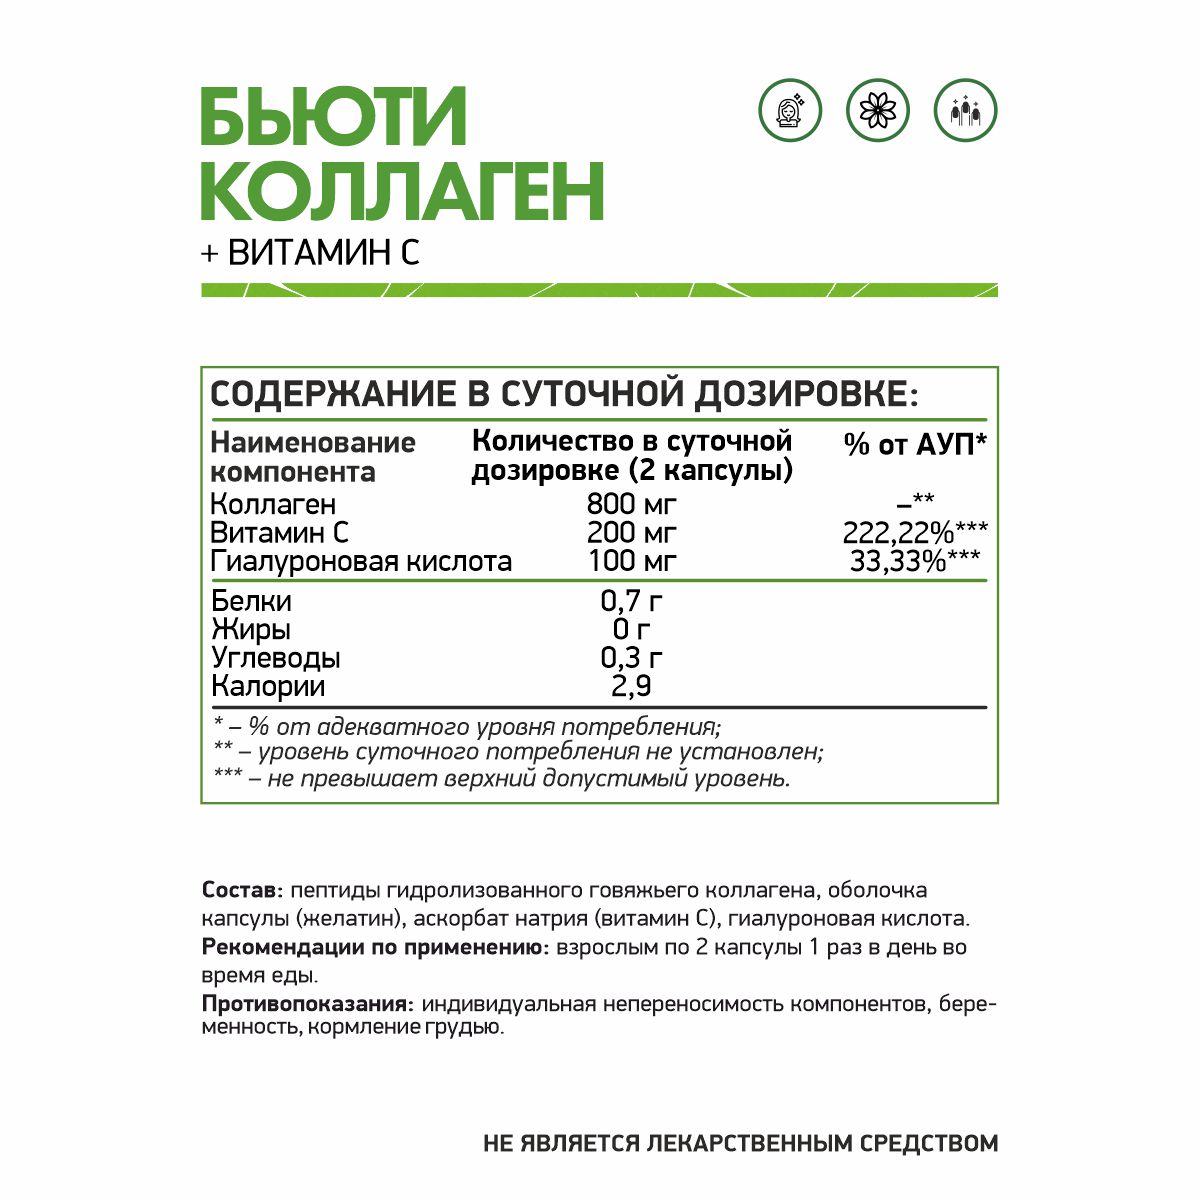 Natural Supp Бьюти коллаген + Витамин С (60 капс.)